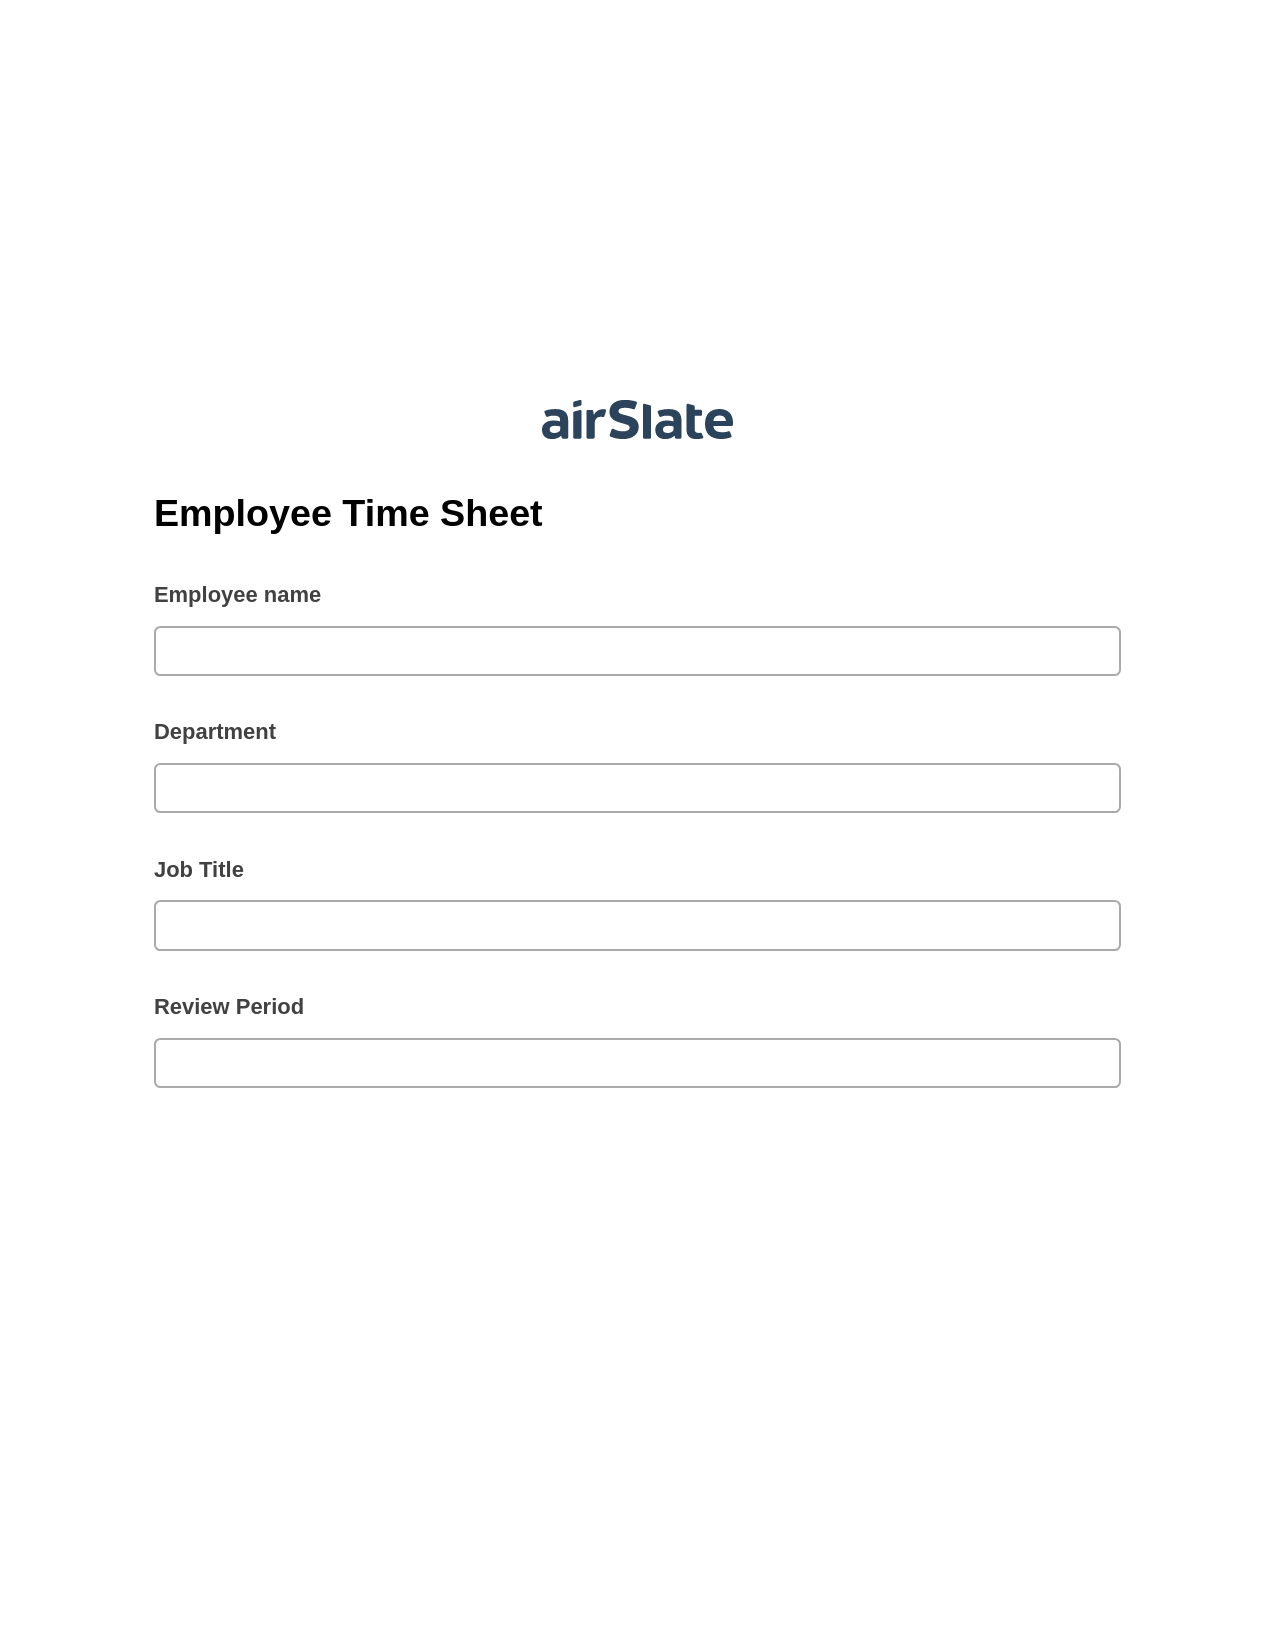 Multirole Employee Time Sheet Pre-fill from MySQL Bot, Create slate addon, Export to NetSuite Bot